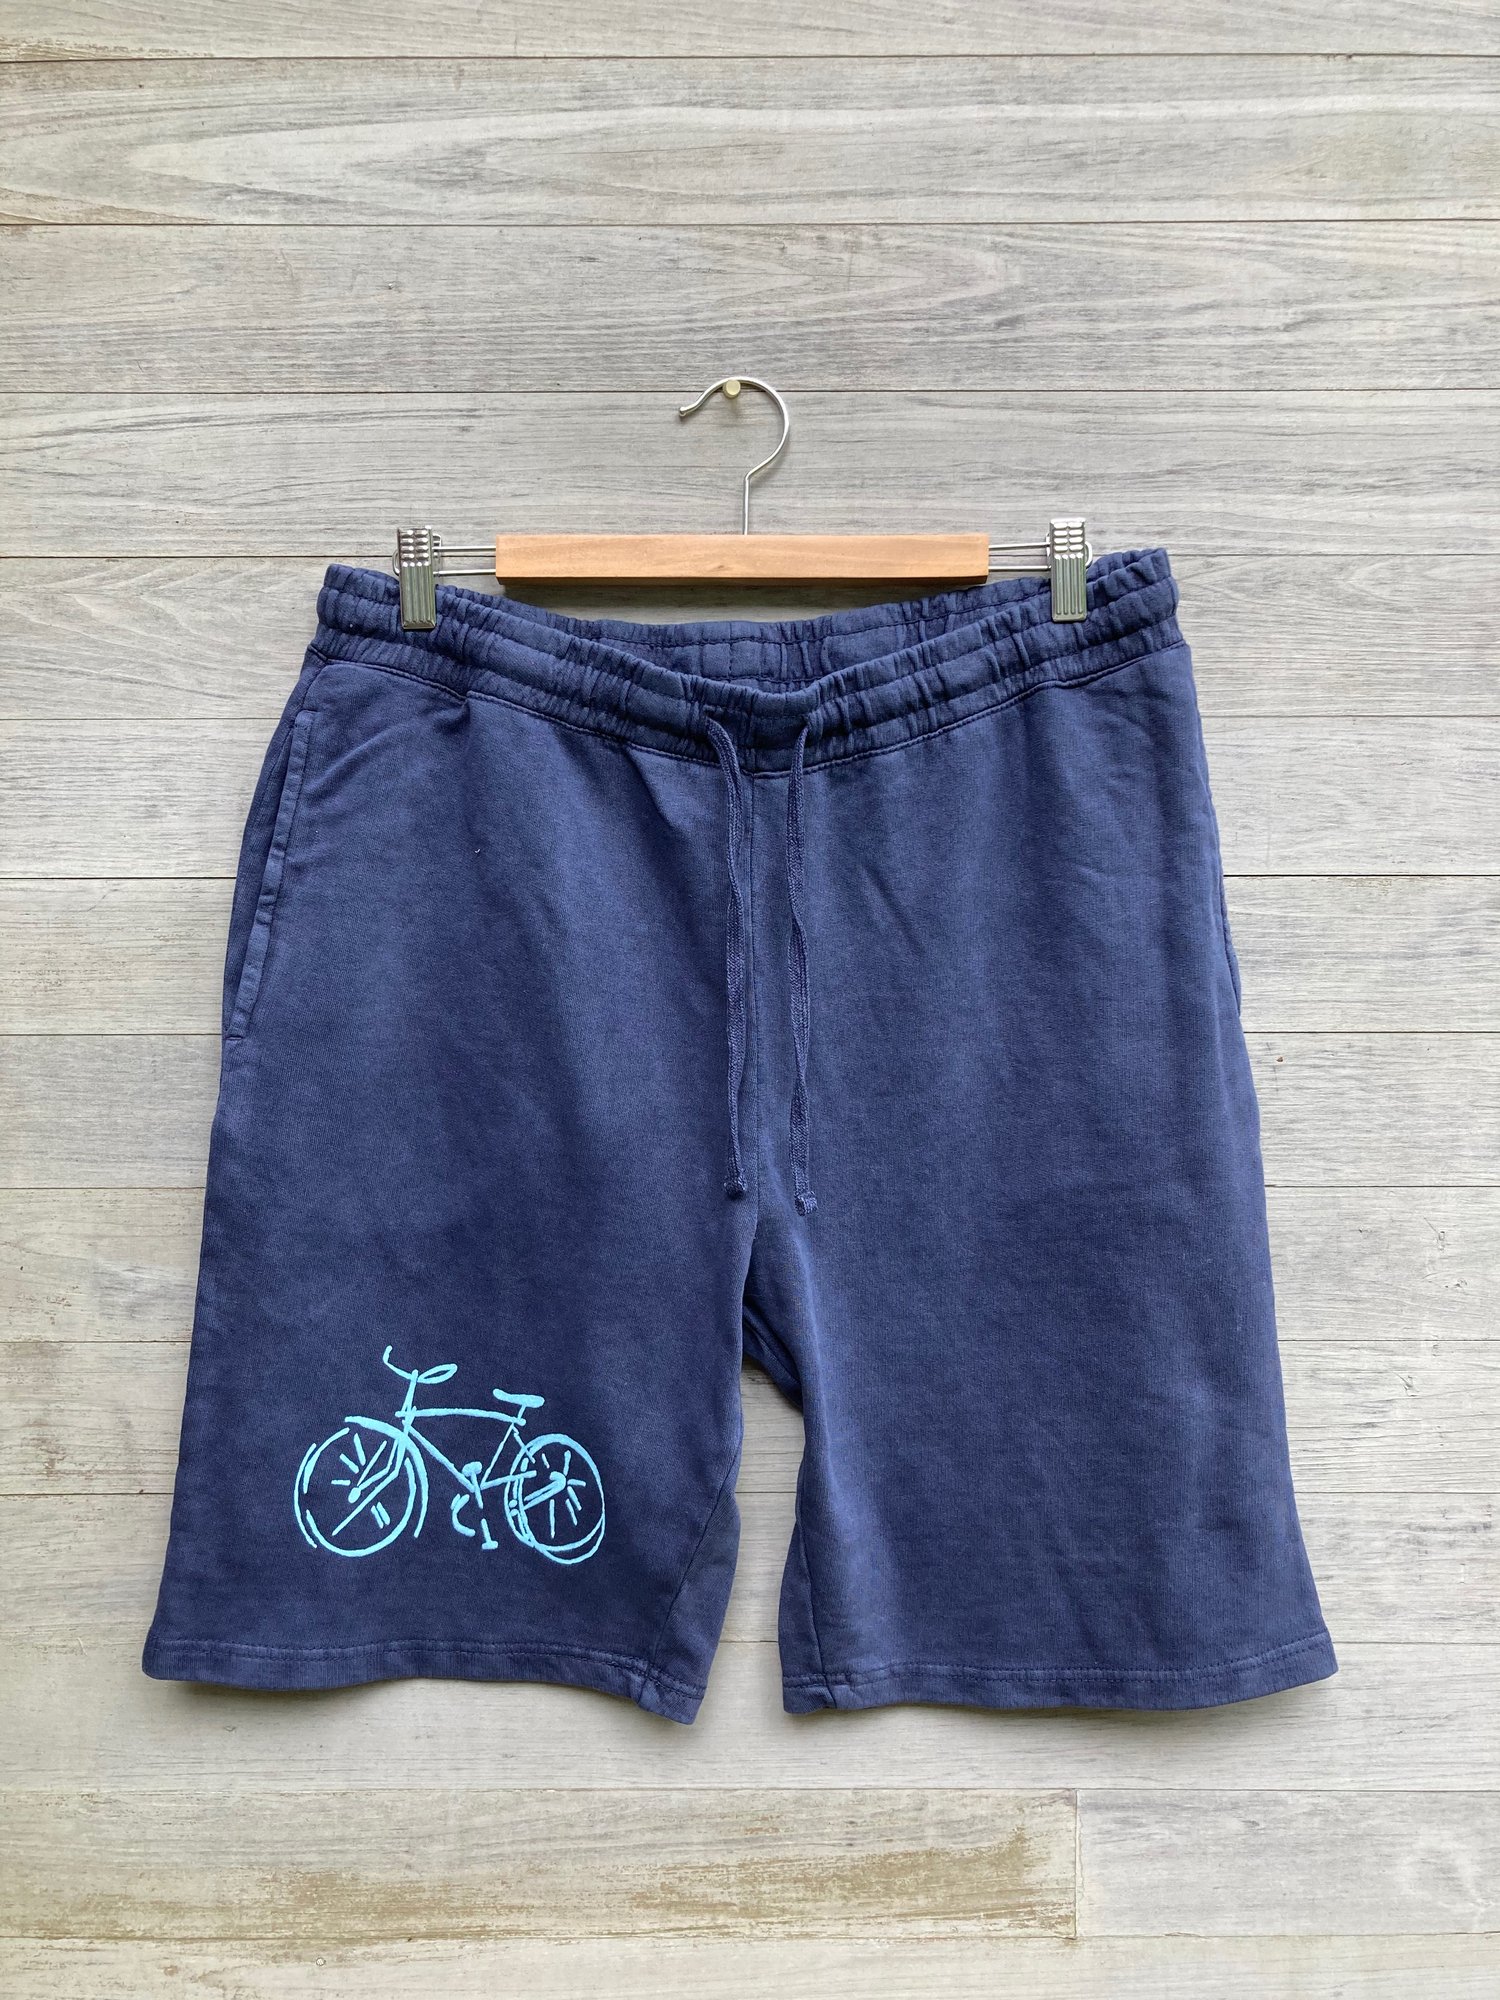 Image of Men's Bicycle Shorts